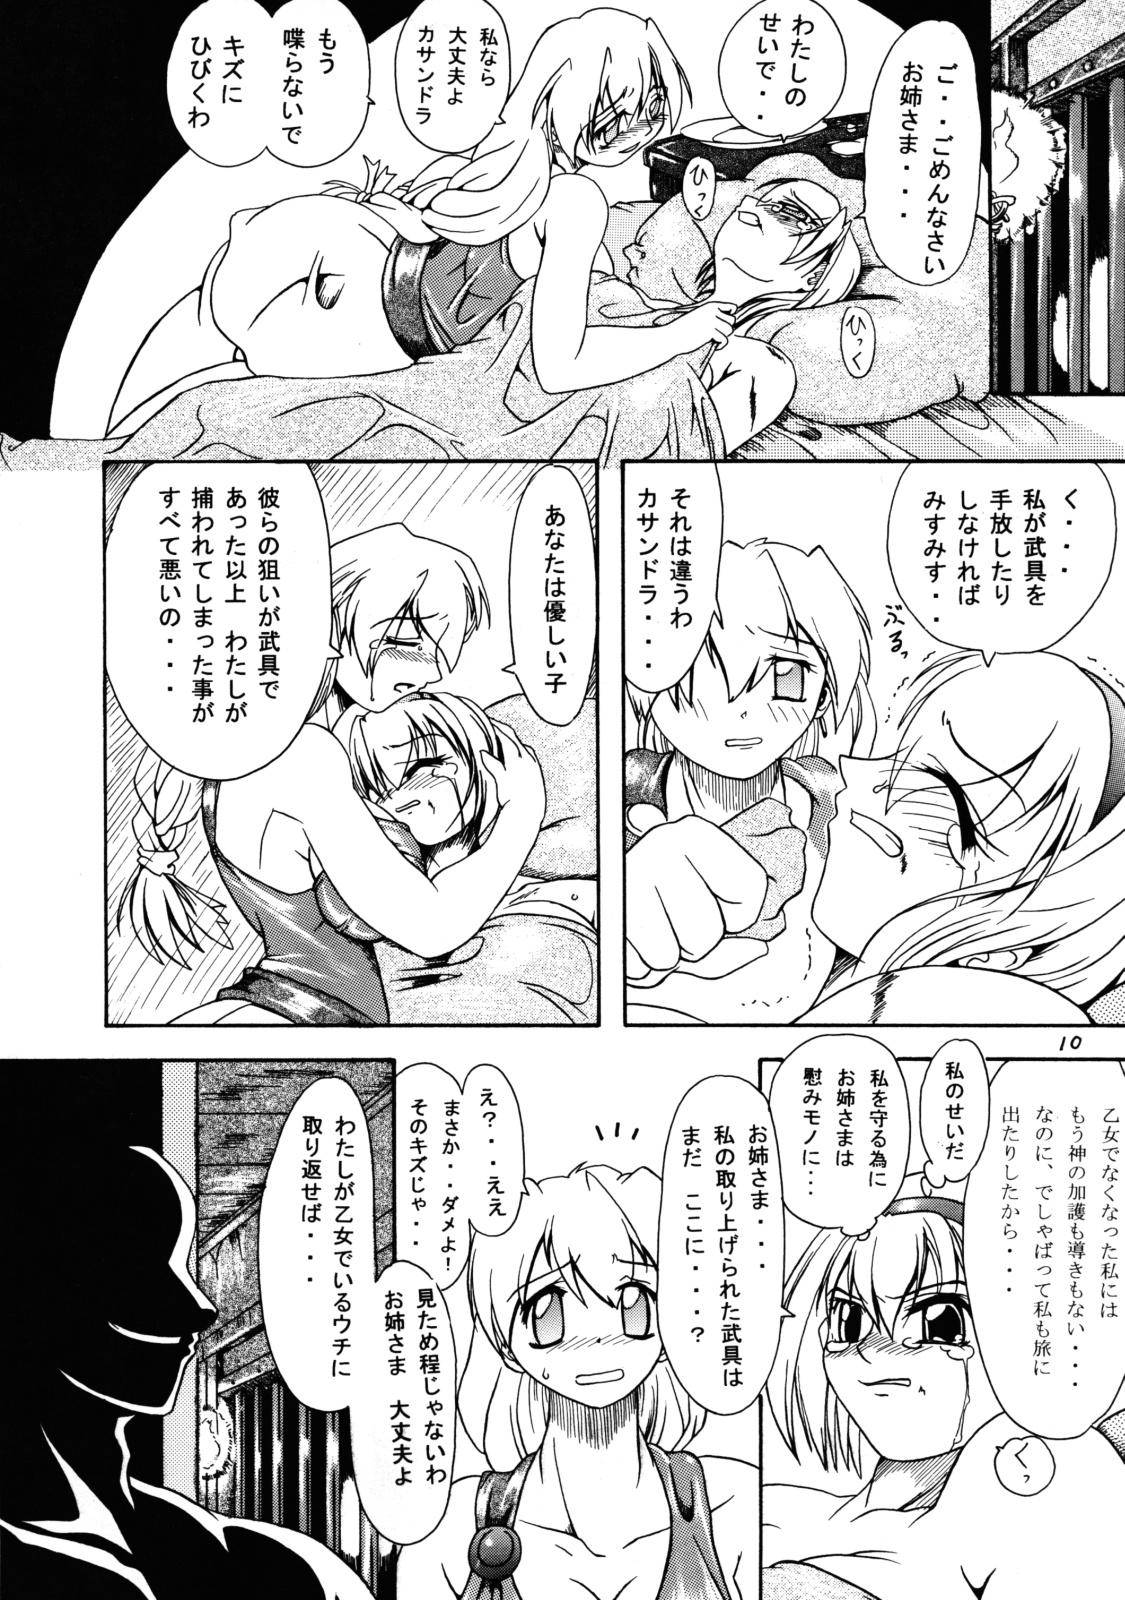 Nalgas Kakugee Sanmai 3 - Darkstalkers Soulcalibur Pendeja - Page 9